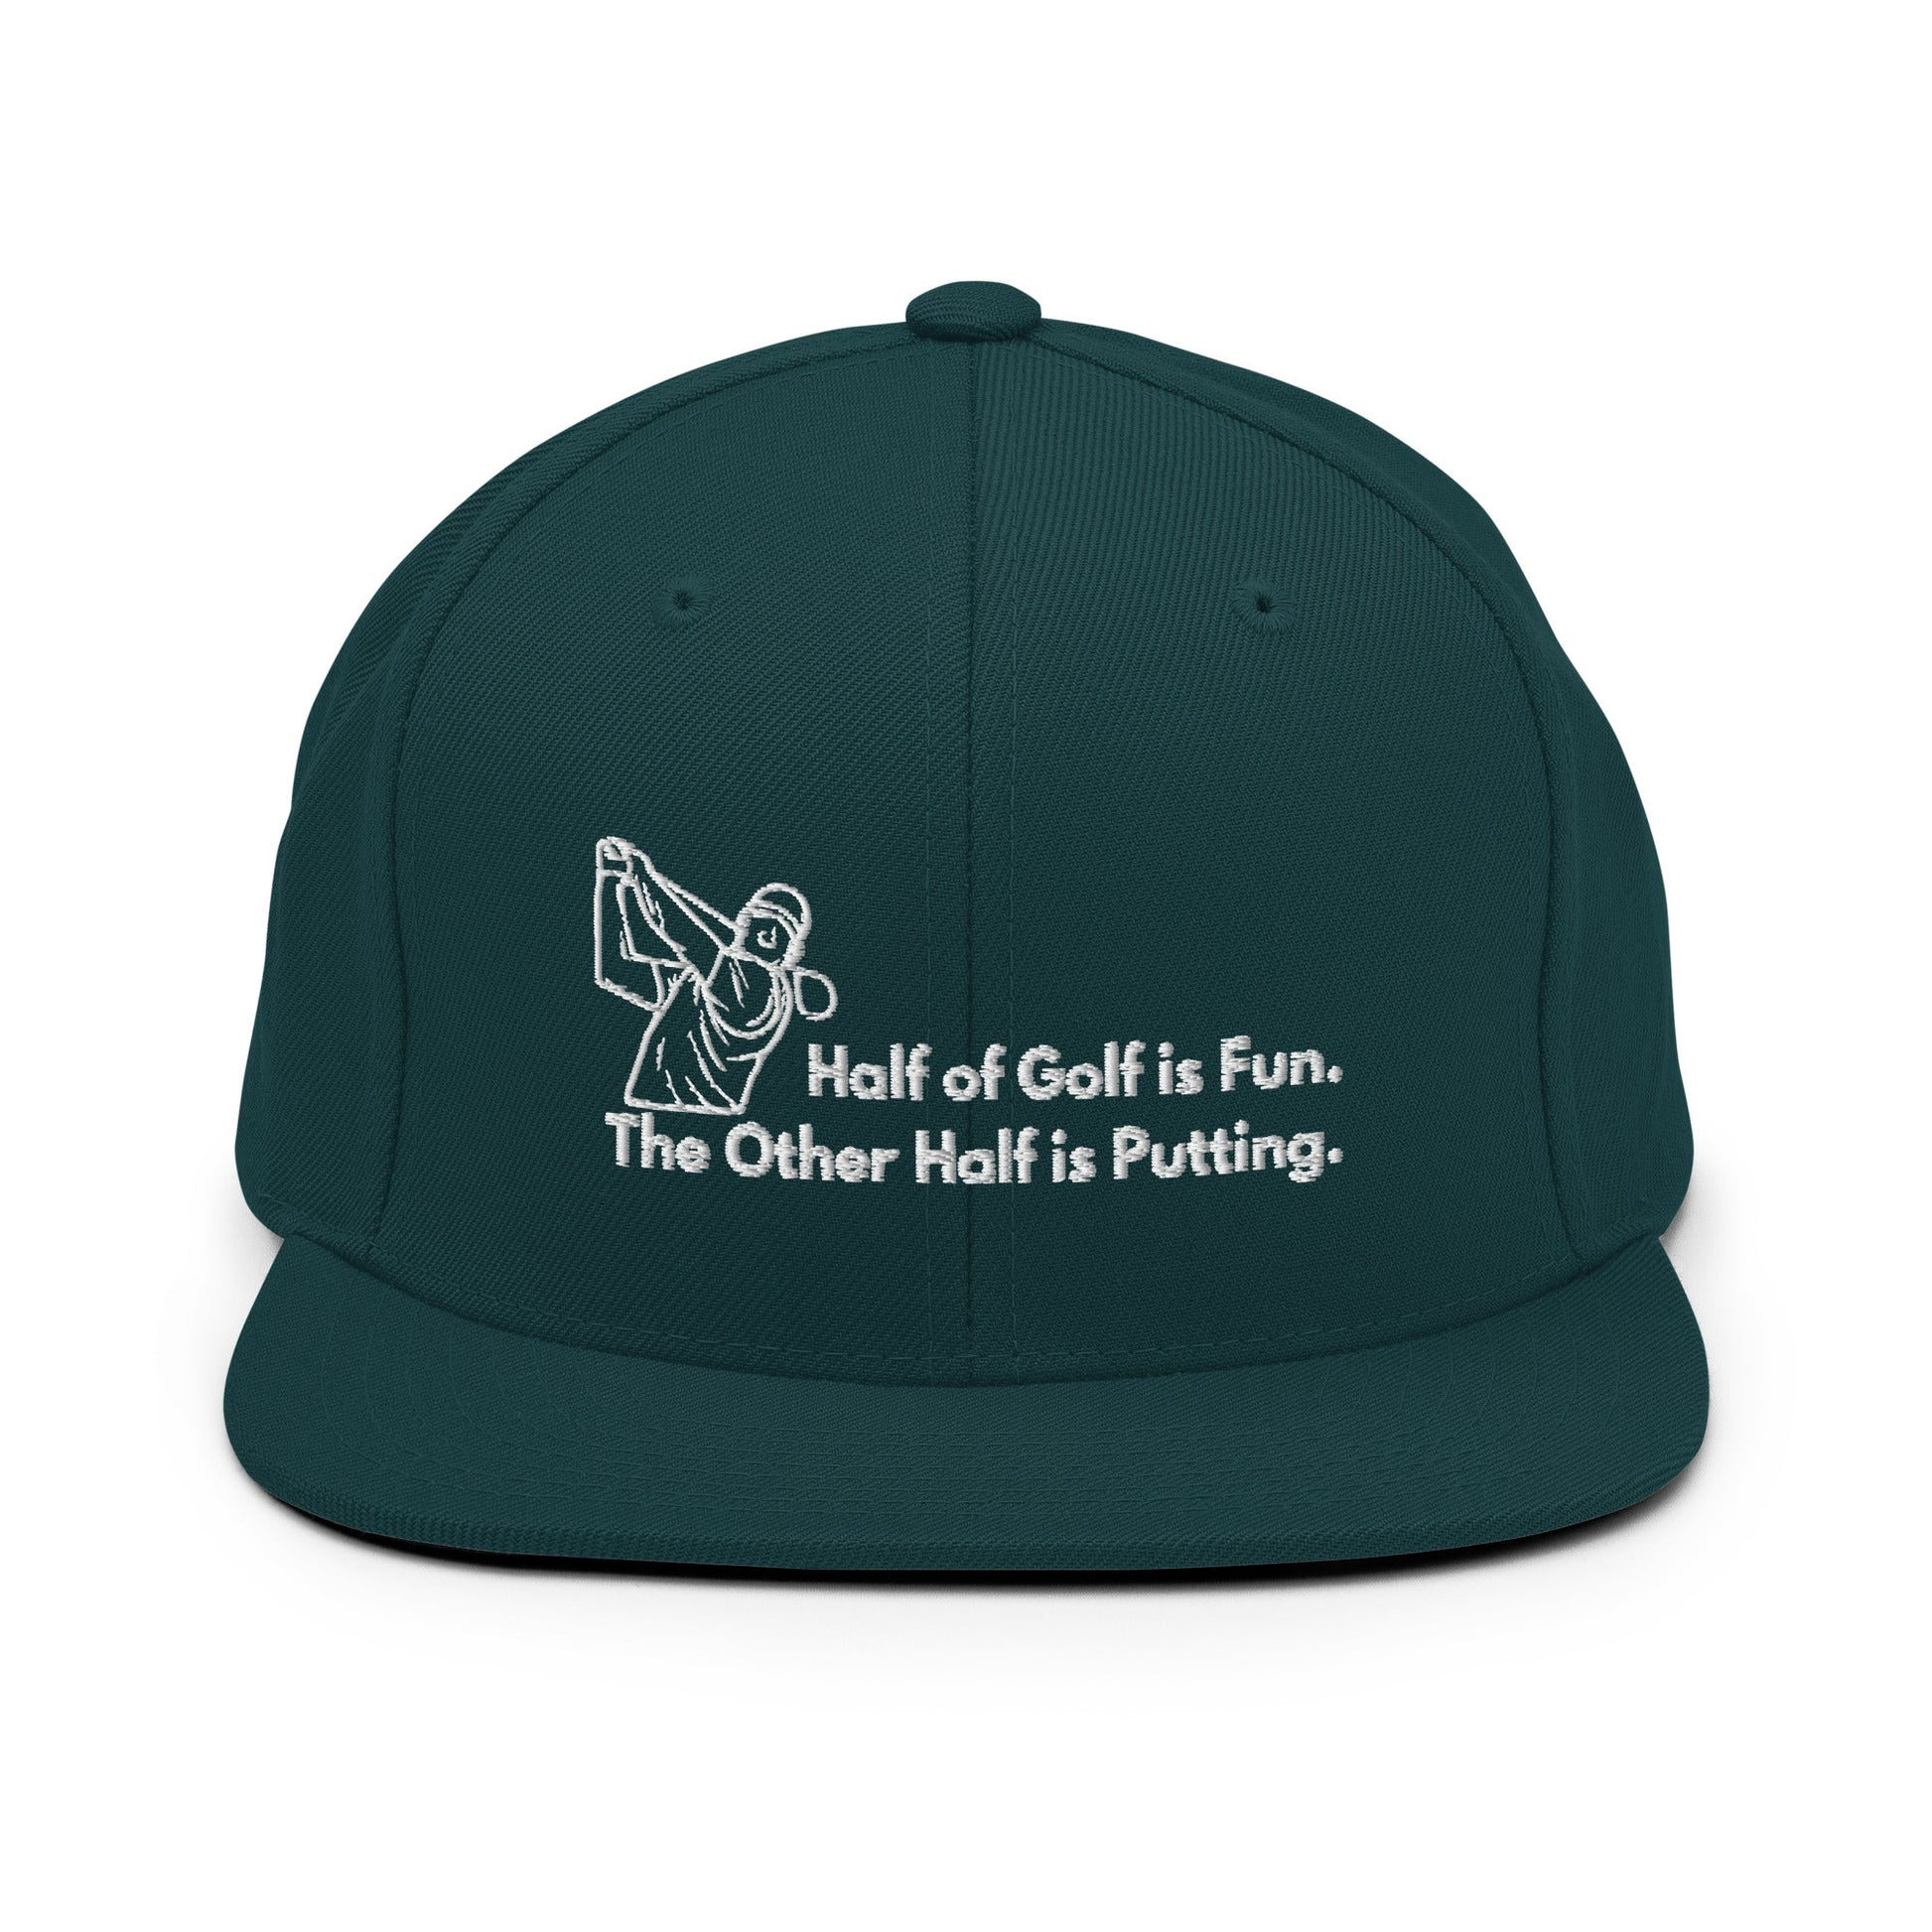 Funny Golfer Gifts  Snapback Hat Spruce Half of Golf is Fun Snapback Hat